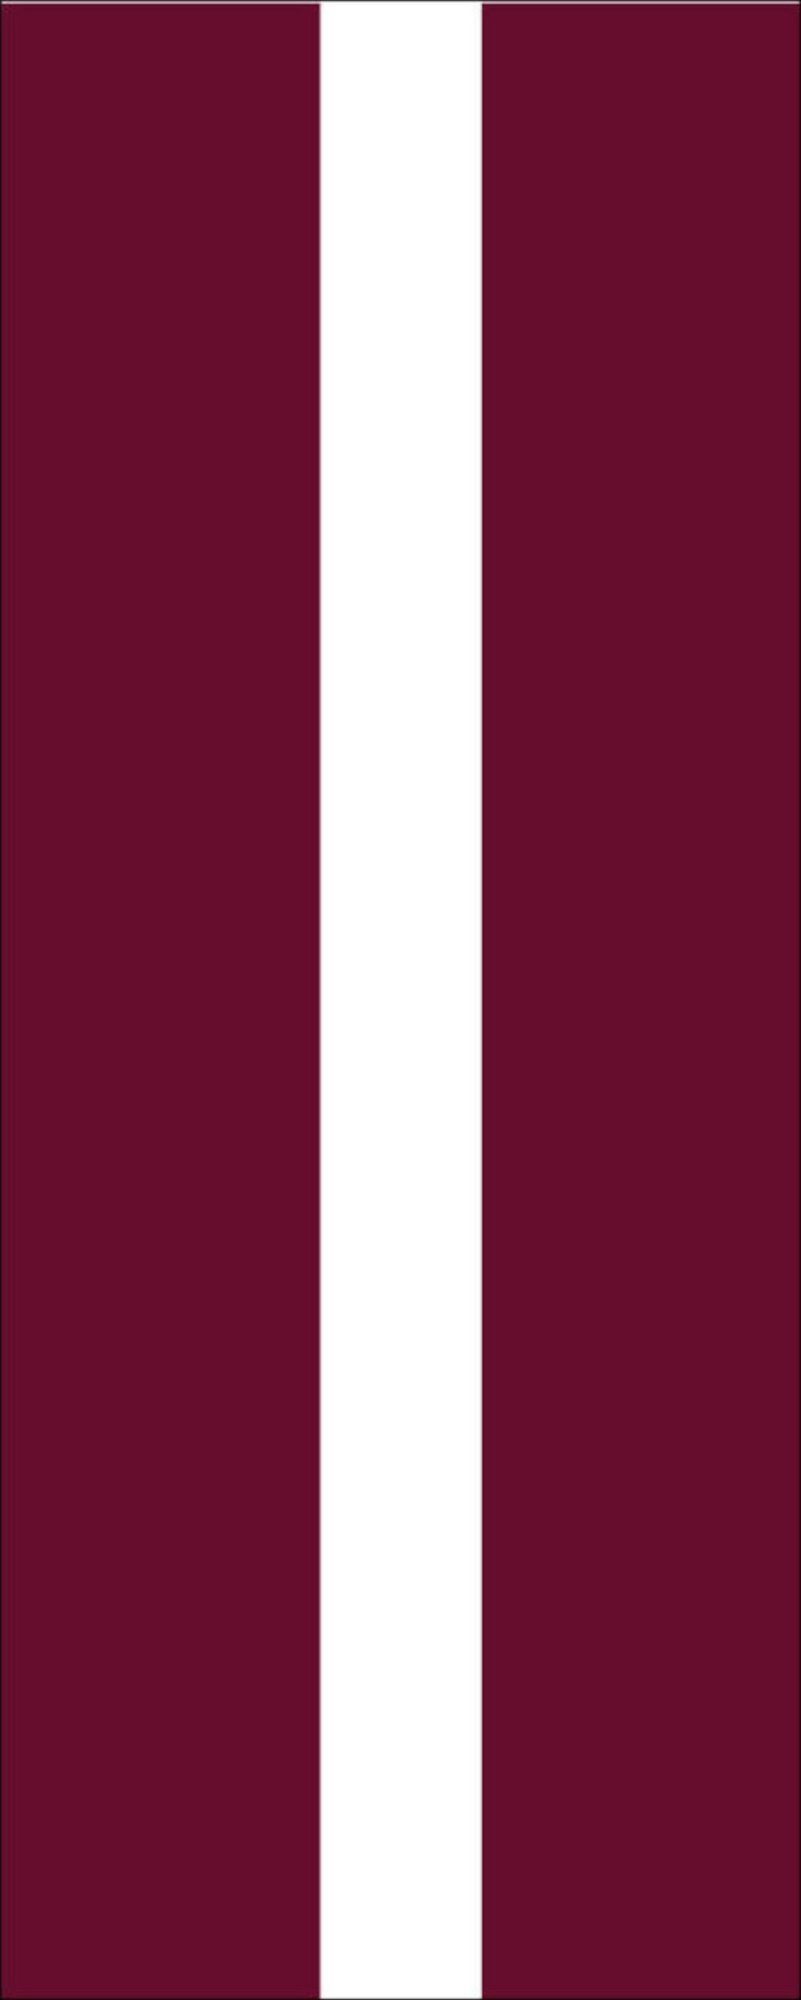 Lettland g/m² Flagge 110 Hochformat flaggenmeer Flagge